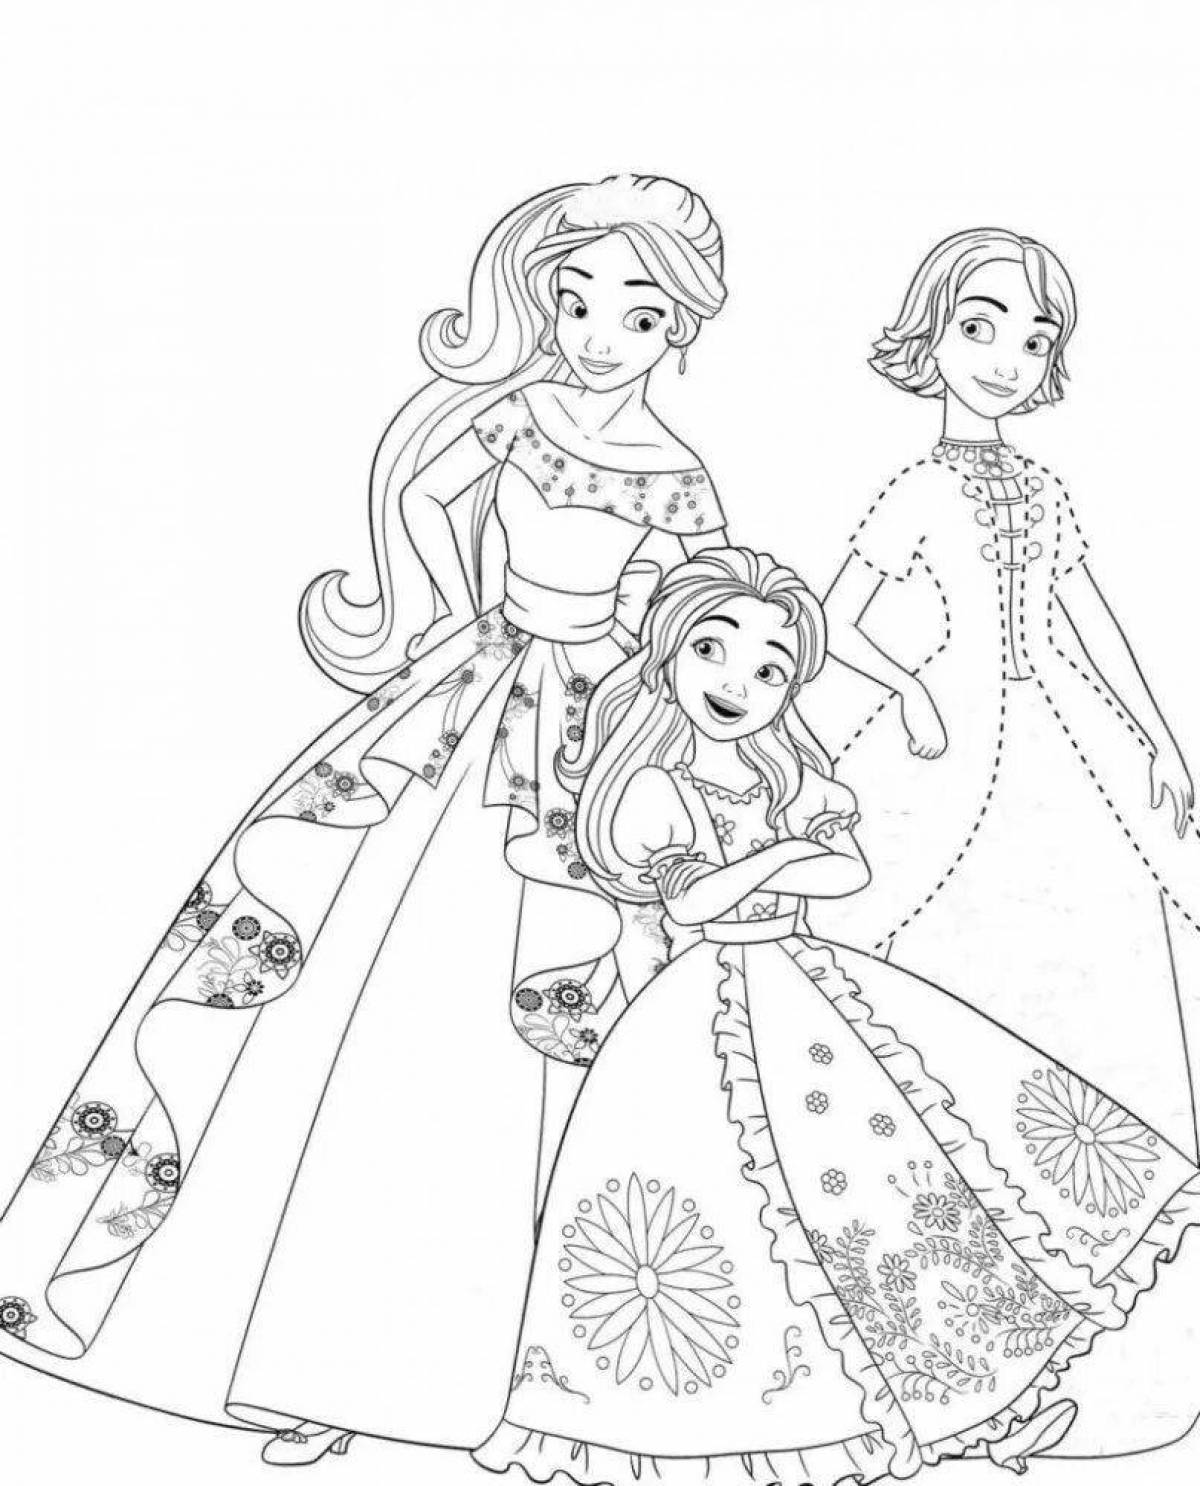 Coloring page alluring elena princess